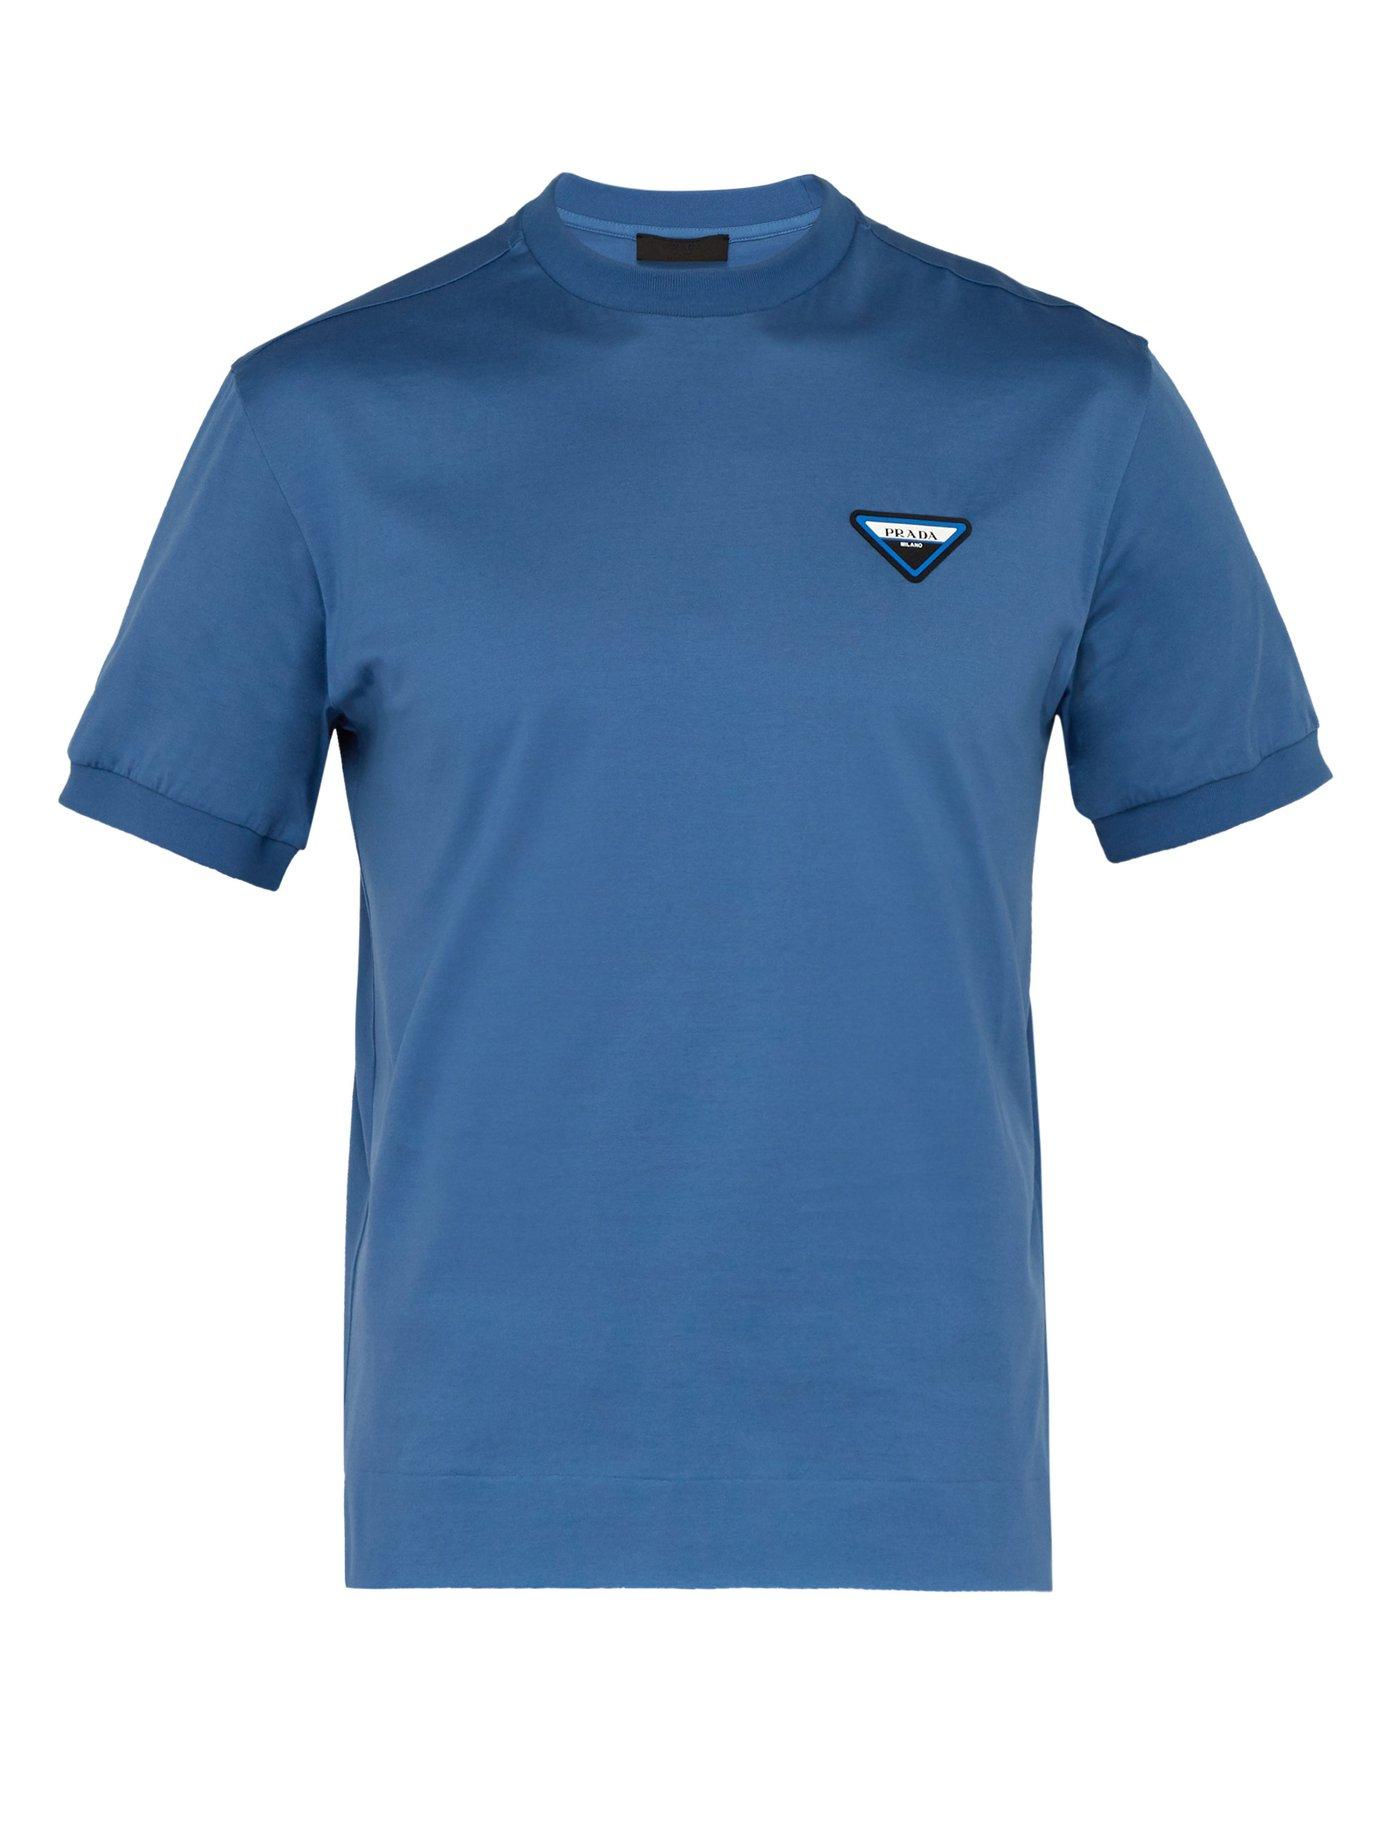 Prada Logo Cotton Jersey T Shirt in Light Blue (Blue) for Men - Lyst